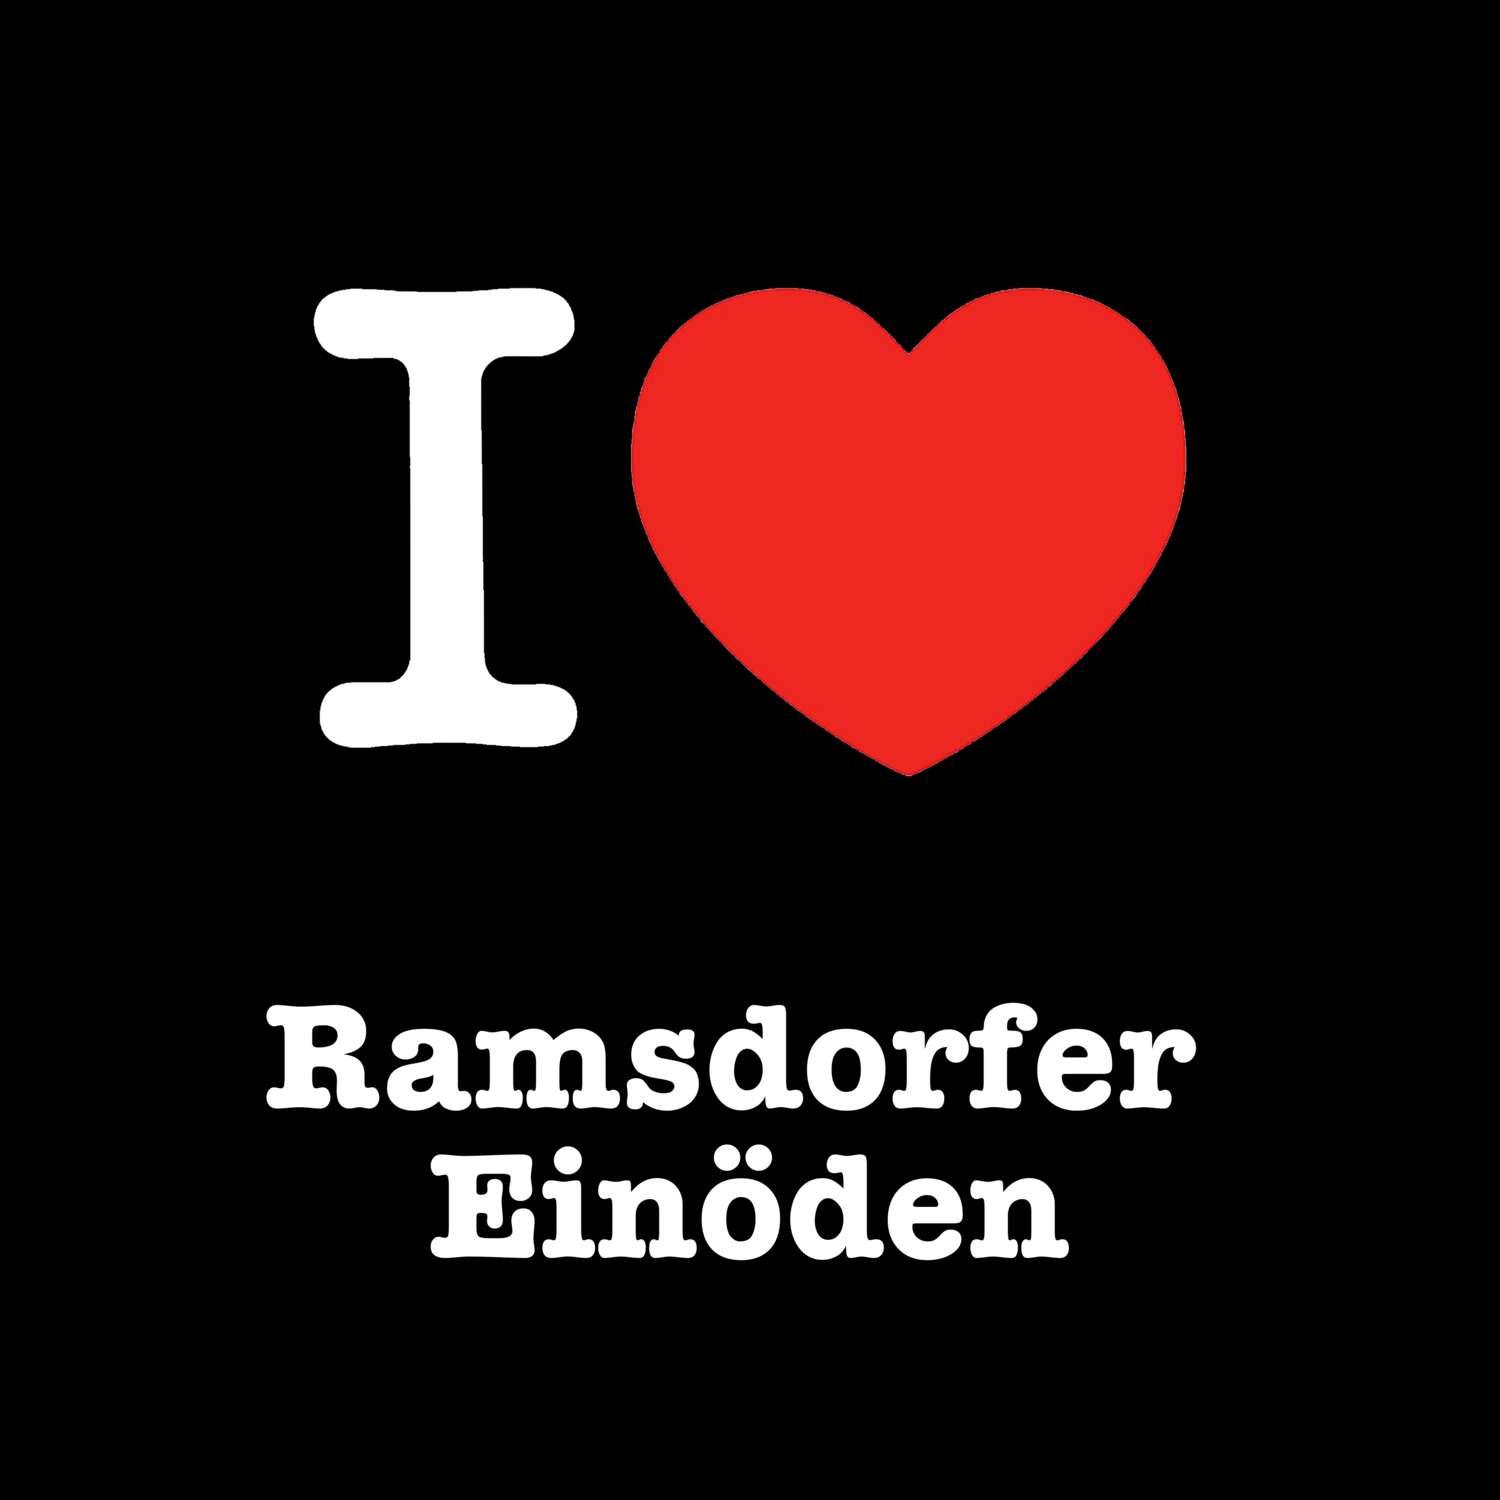 Ramsdorfer Einöden T-Shirt »I love«